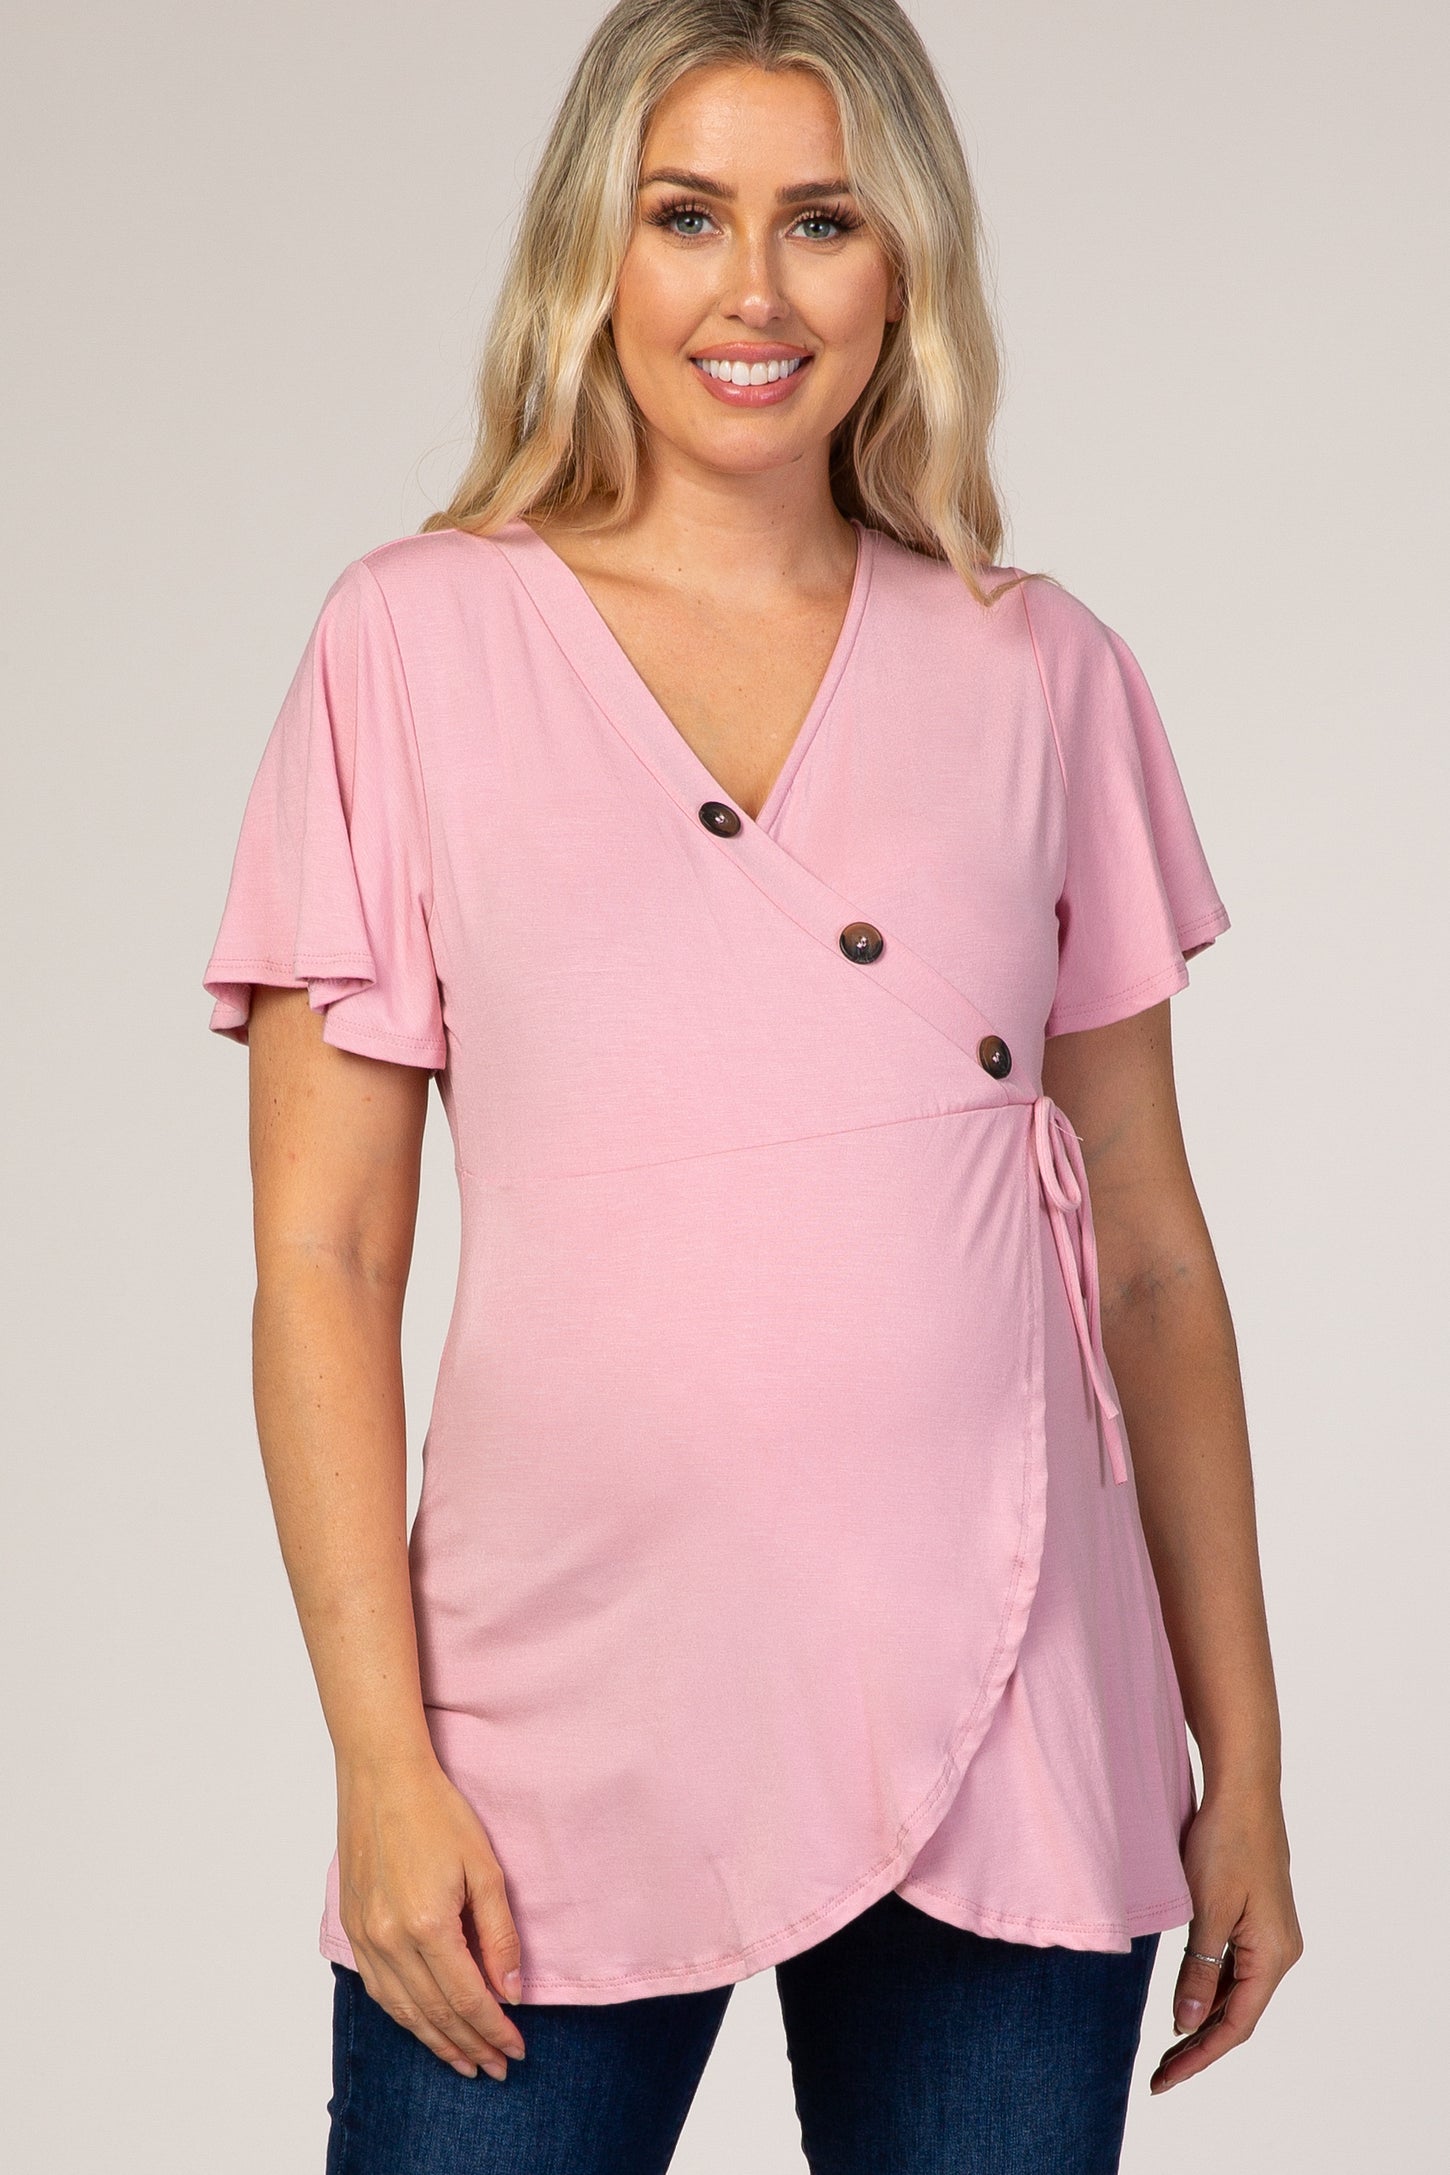 PinkBlush Mauve Short Sleeve Button Accent Wrap Maternity/Nursing Top